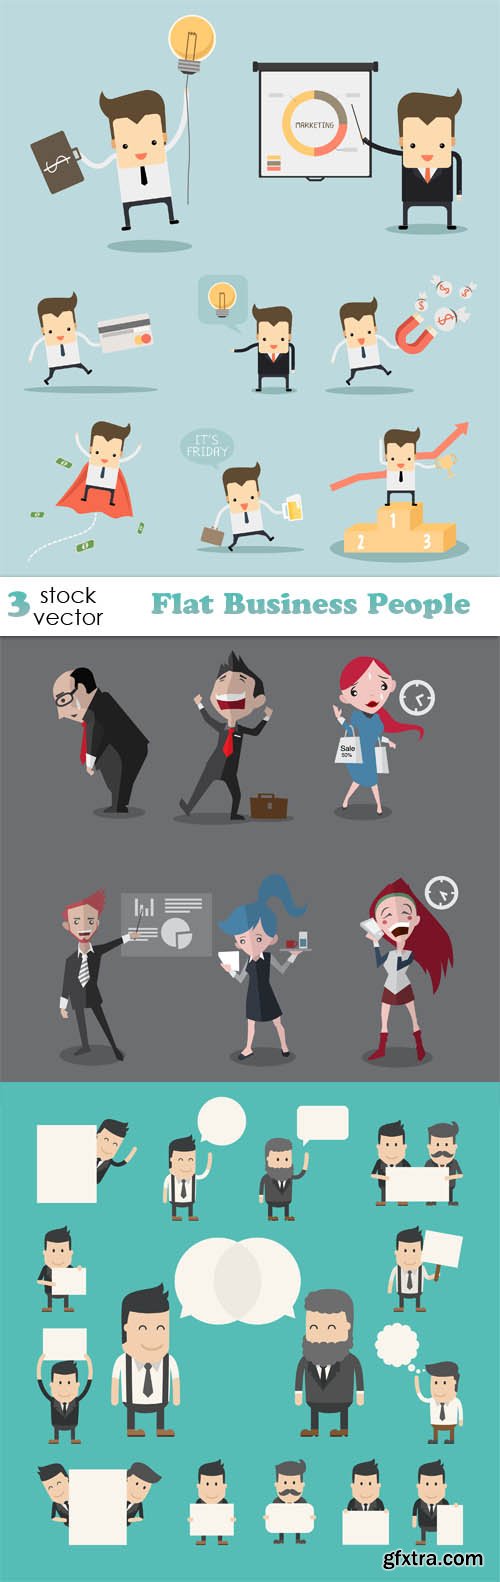 Vectors - Flat Business People